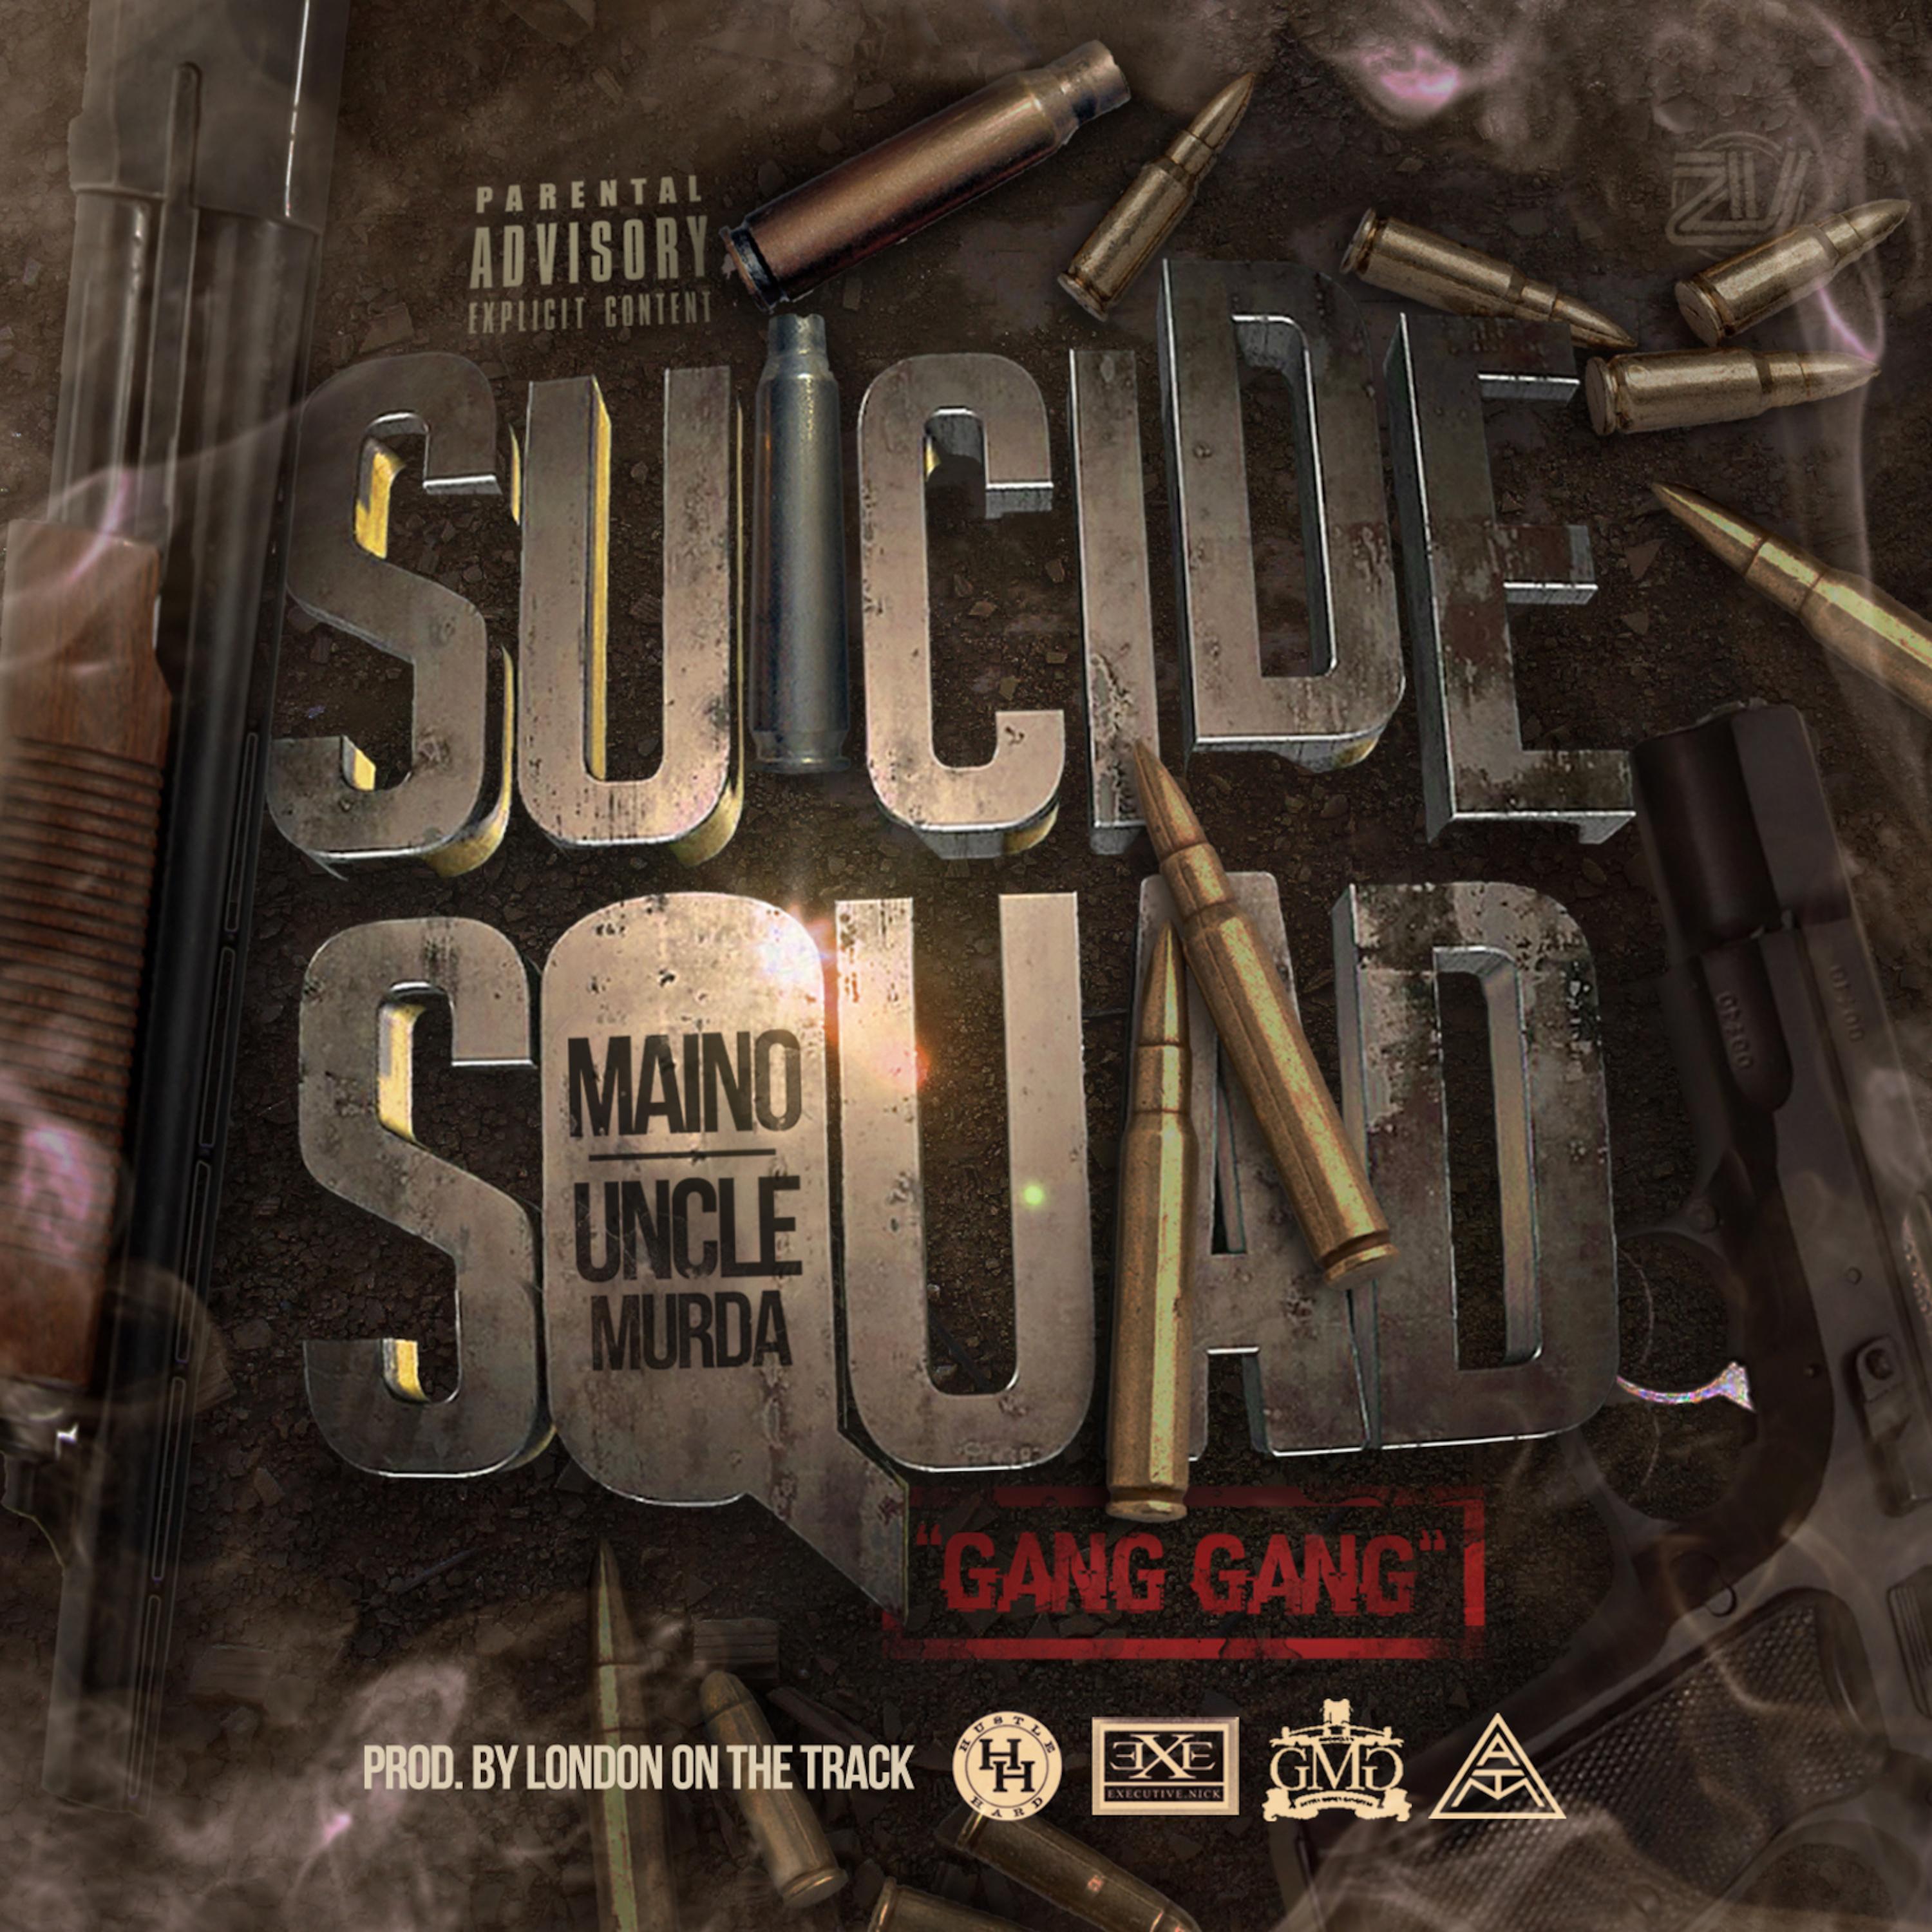 Suicide Squad X Gang Gang专辑